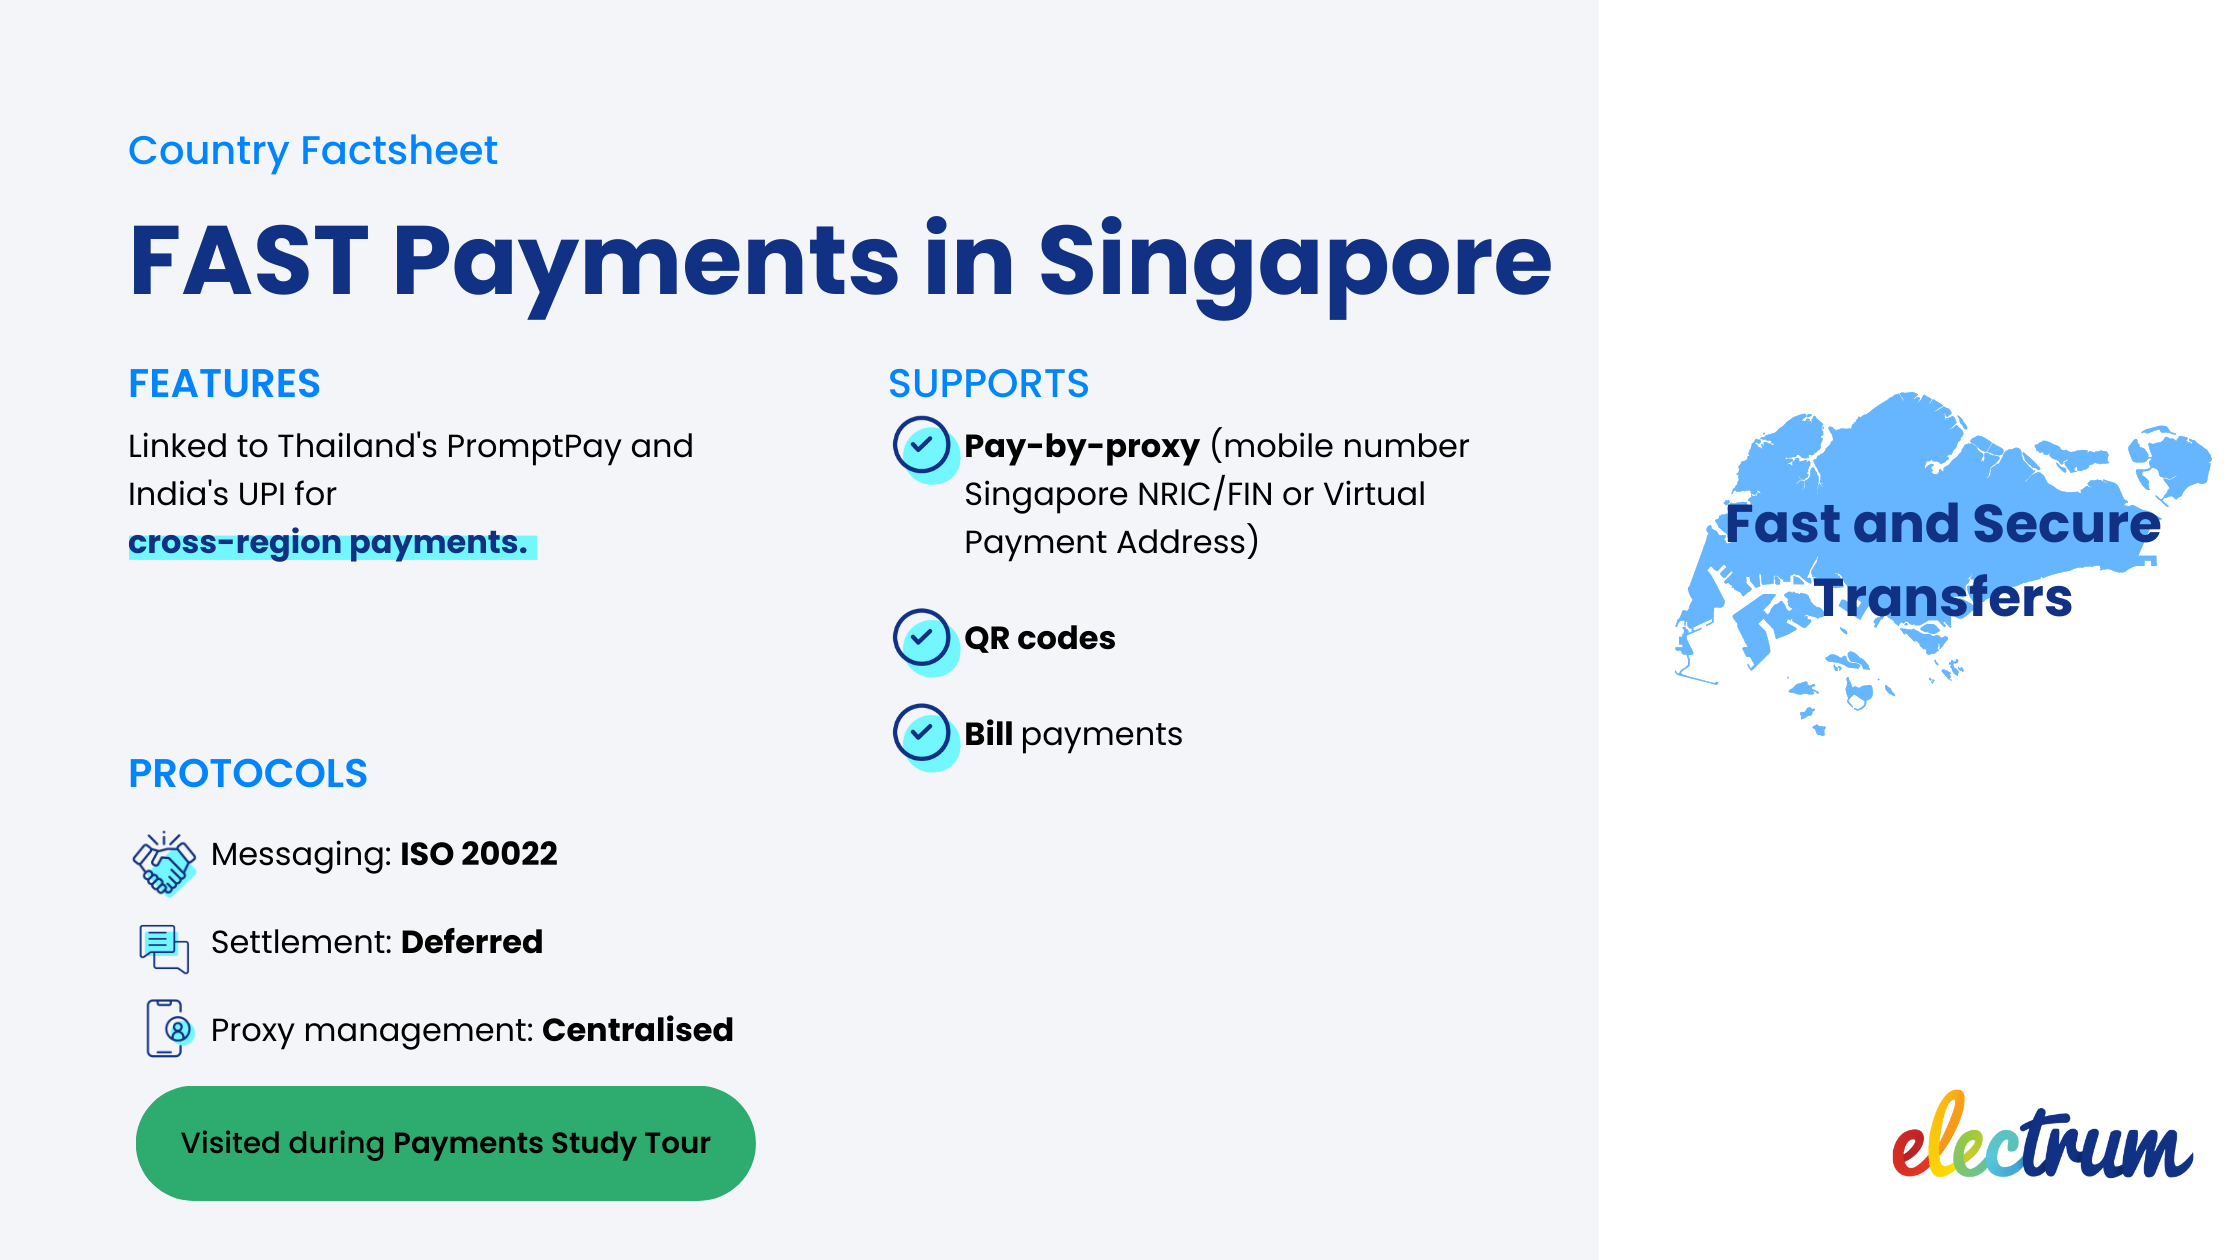 Factsheet summarising FAST Payments in Singapore